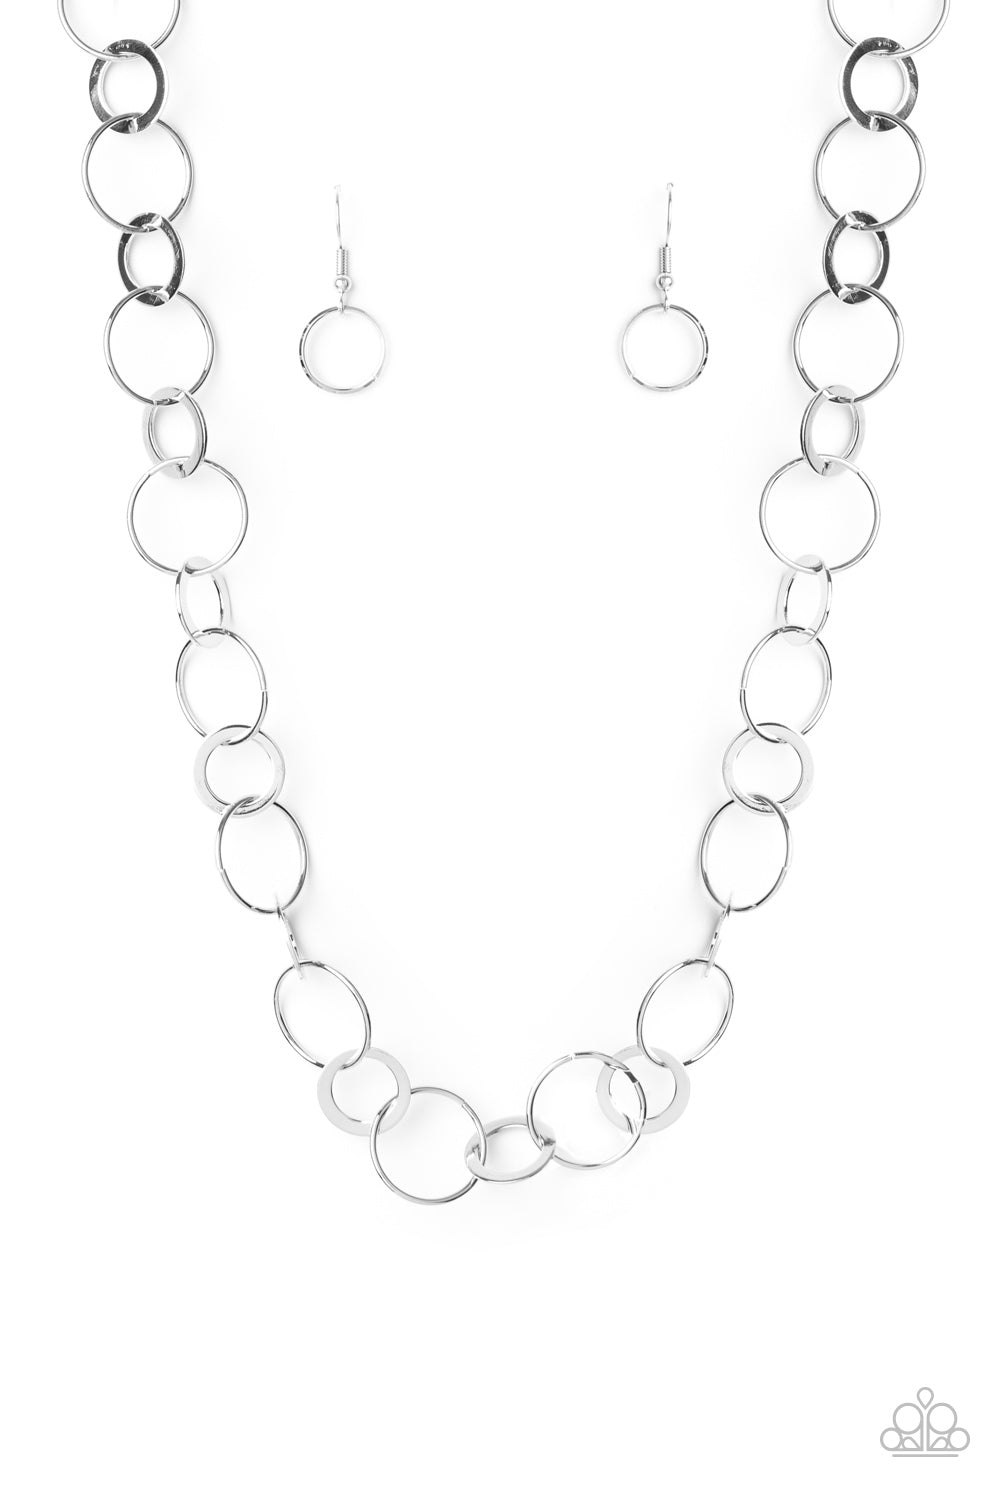 Revolutionary Radiance - silver - Paparazzi necklace